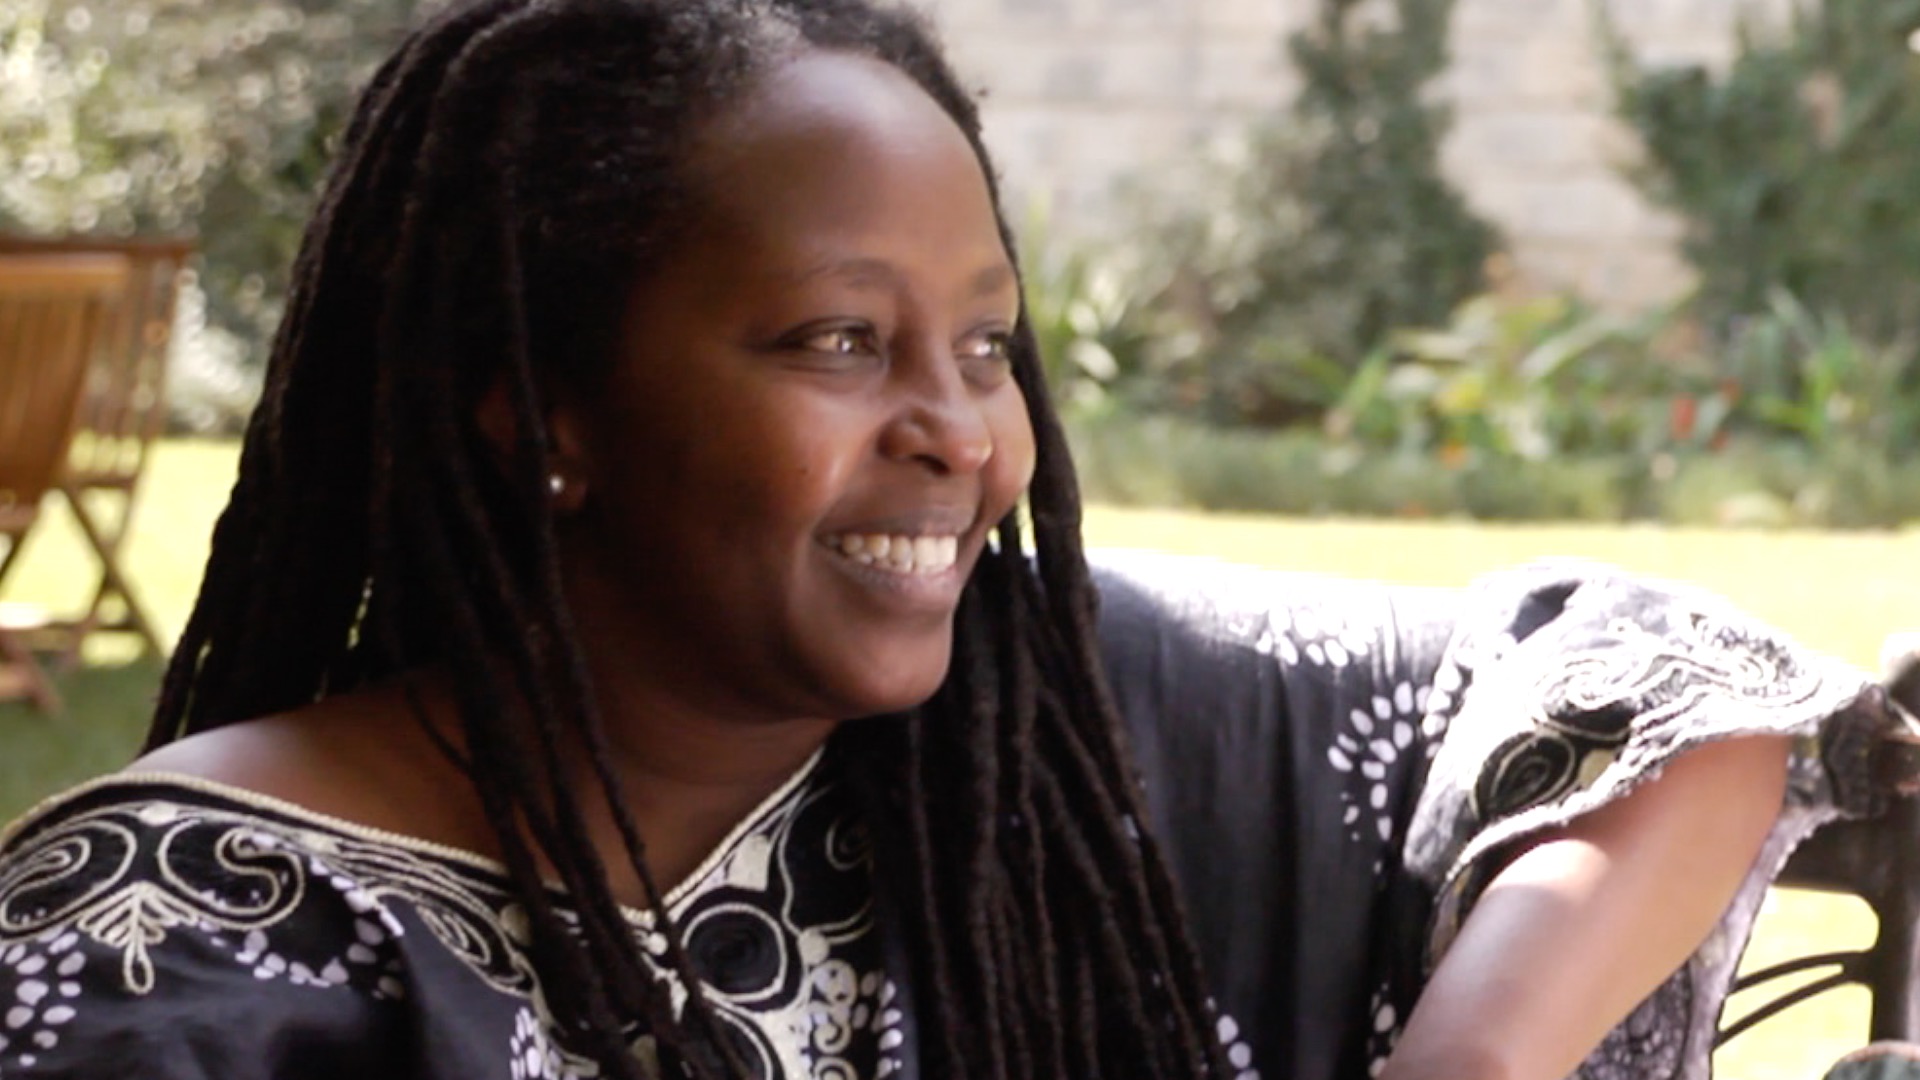 joy kiano of murangi homes during when interview with david roy in nairobi kenya